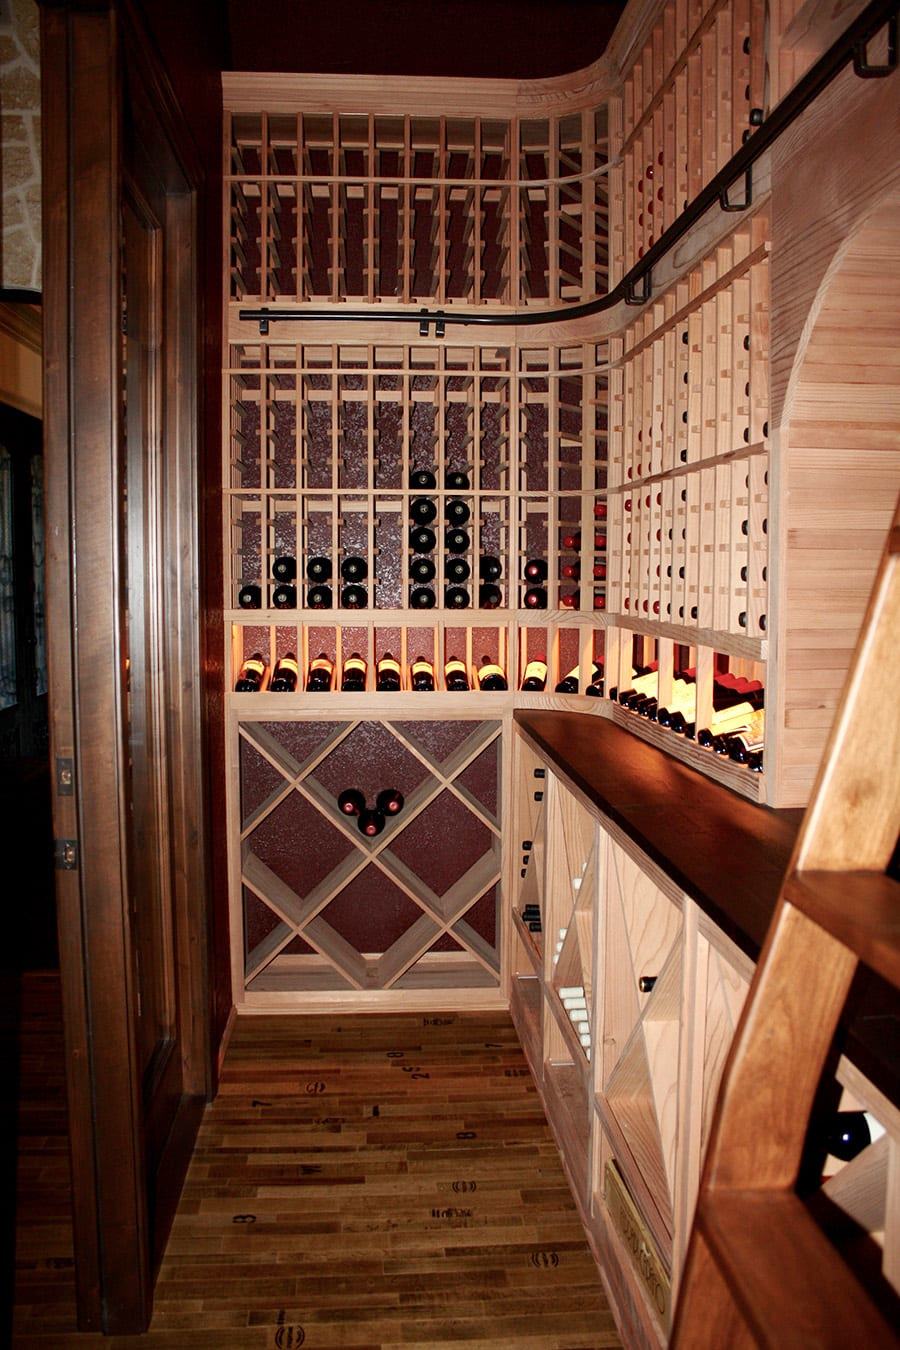 Austin residential wine cellars